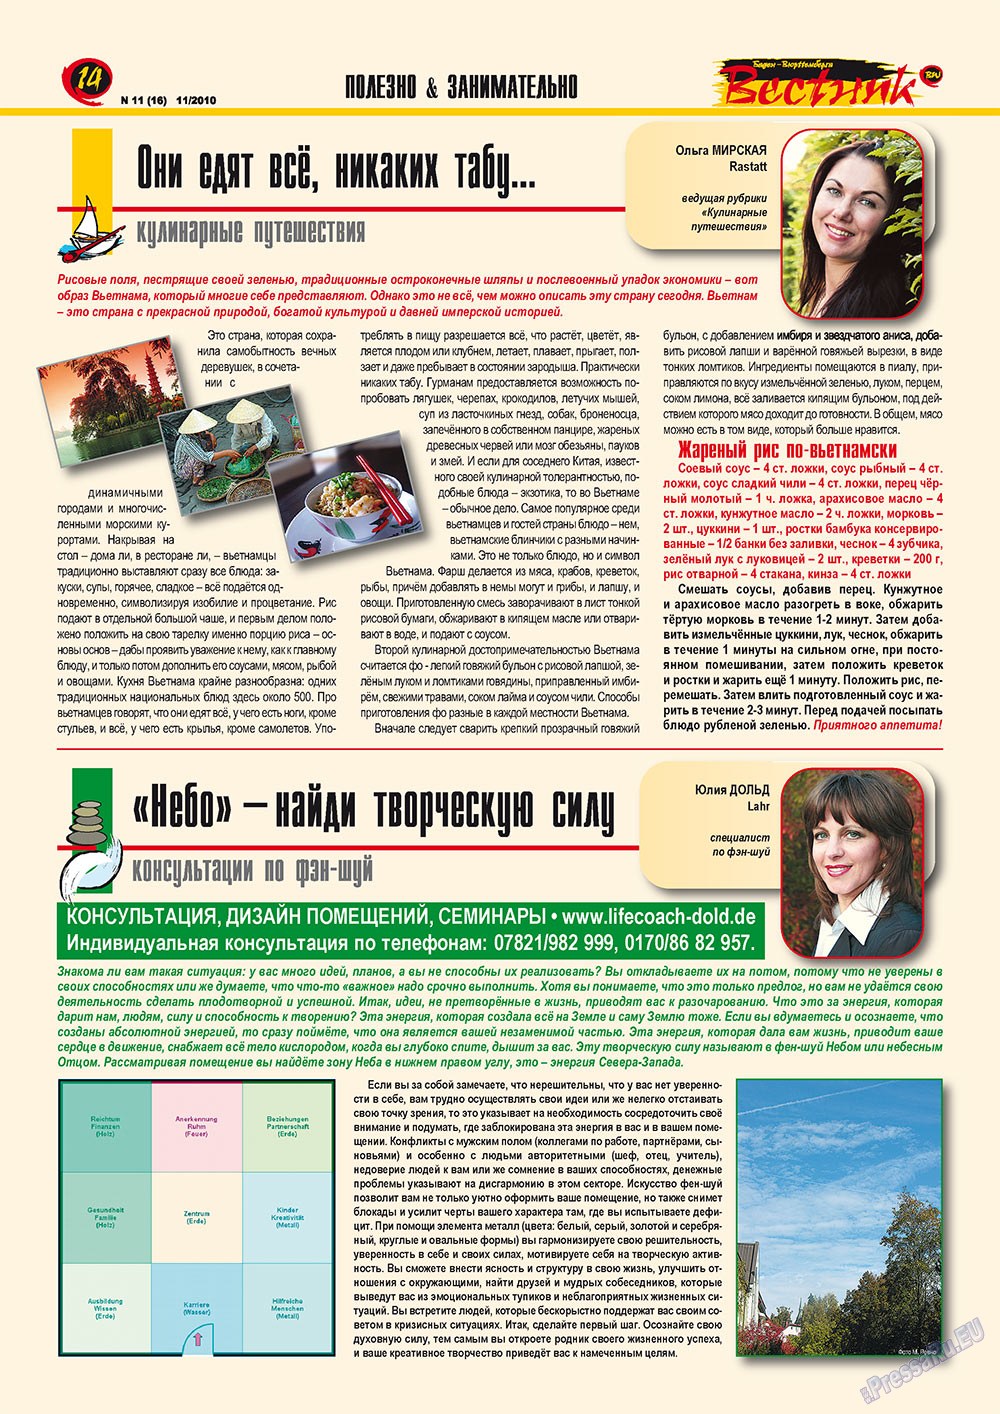 Вестник-info (журнал). 2010 год, номер 11, стр. 14